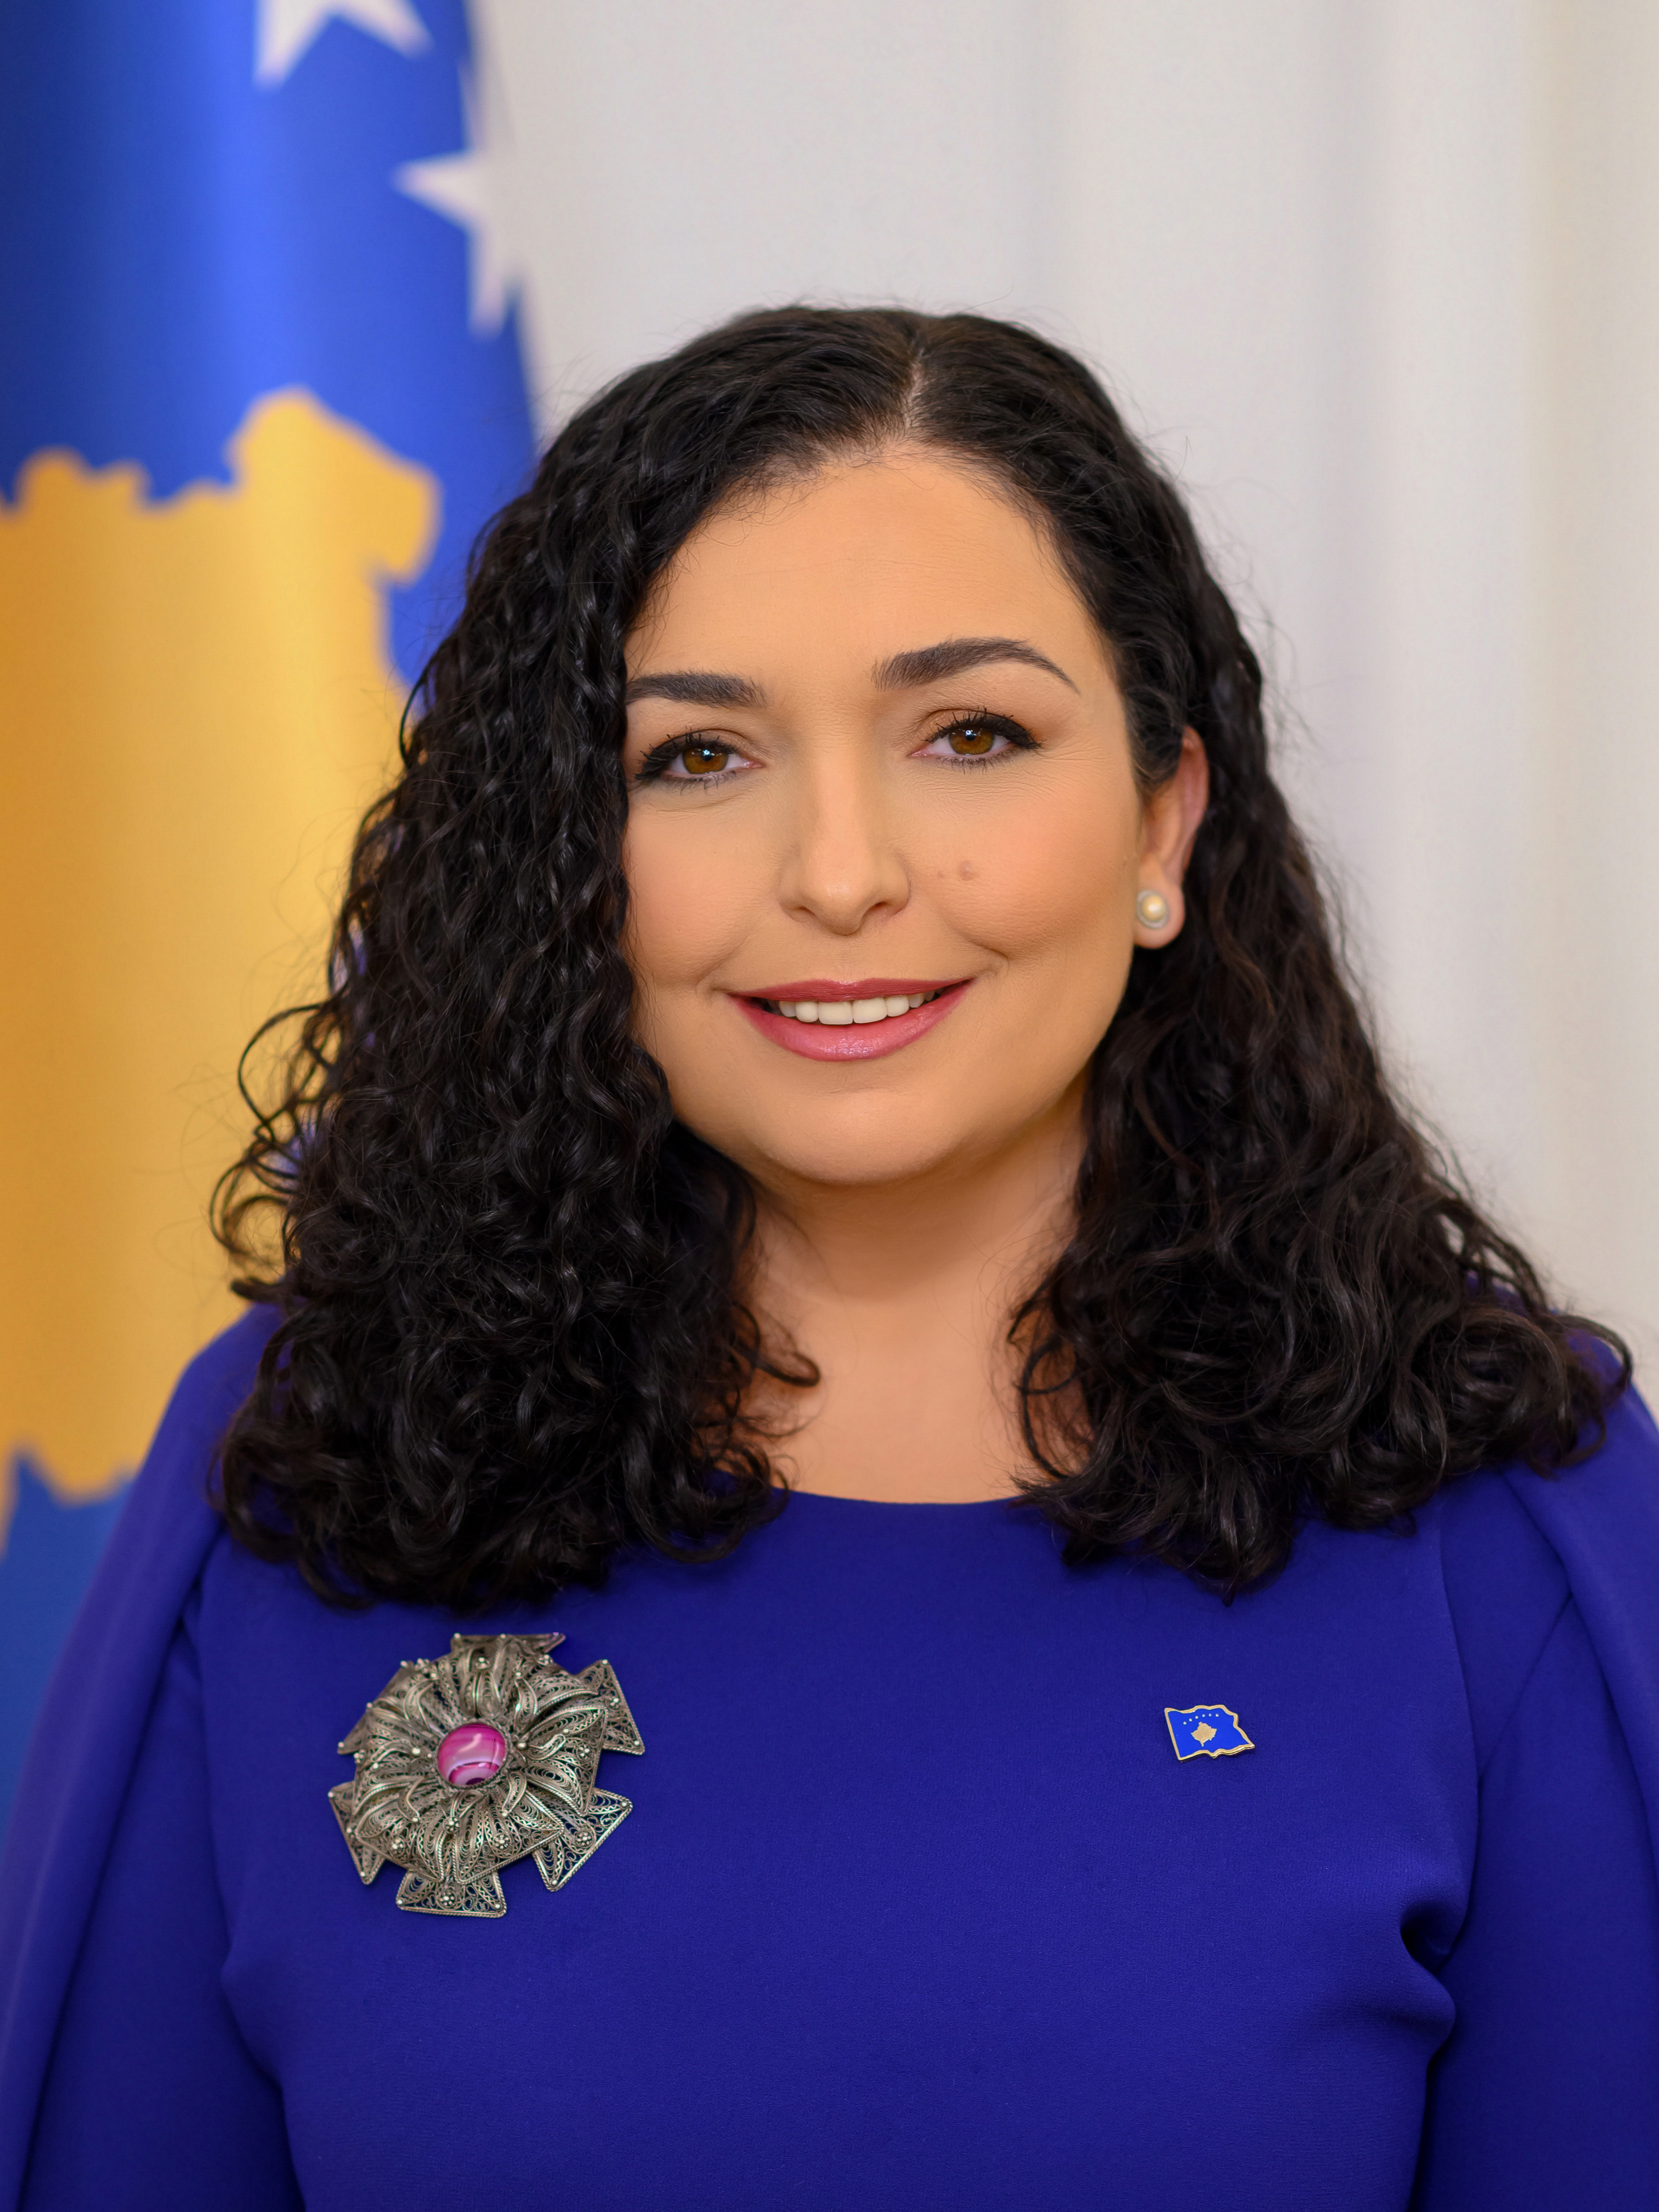 Her Excellency President Dr. Vjosa Osmani, President of the Republic of Kosovo